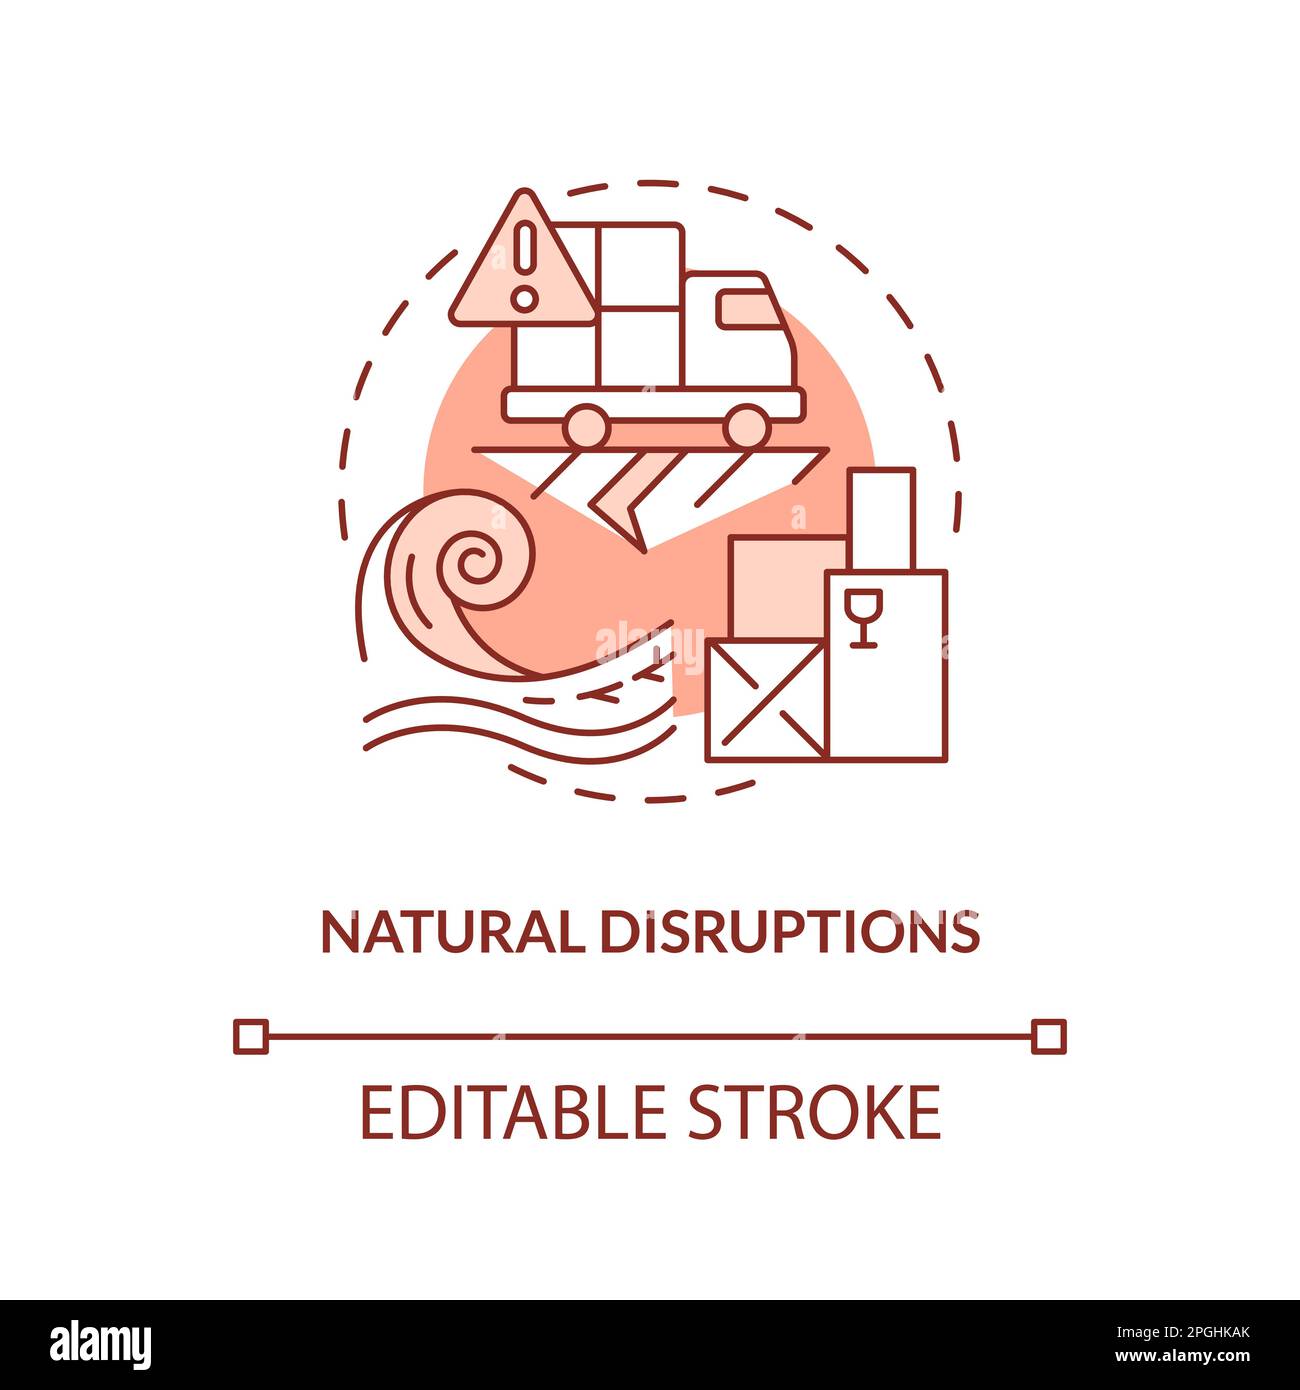 Natural disruptions terracotta concept icon Stock Vector